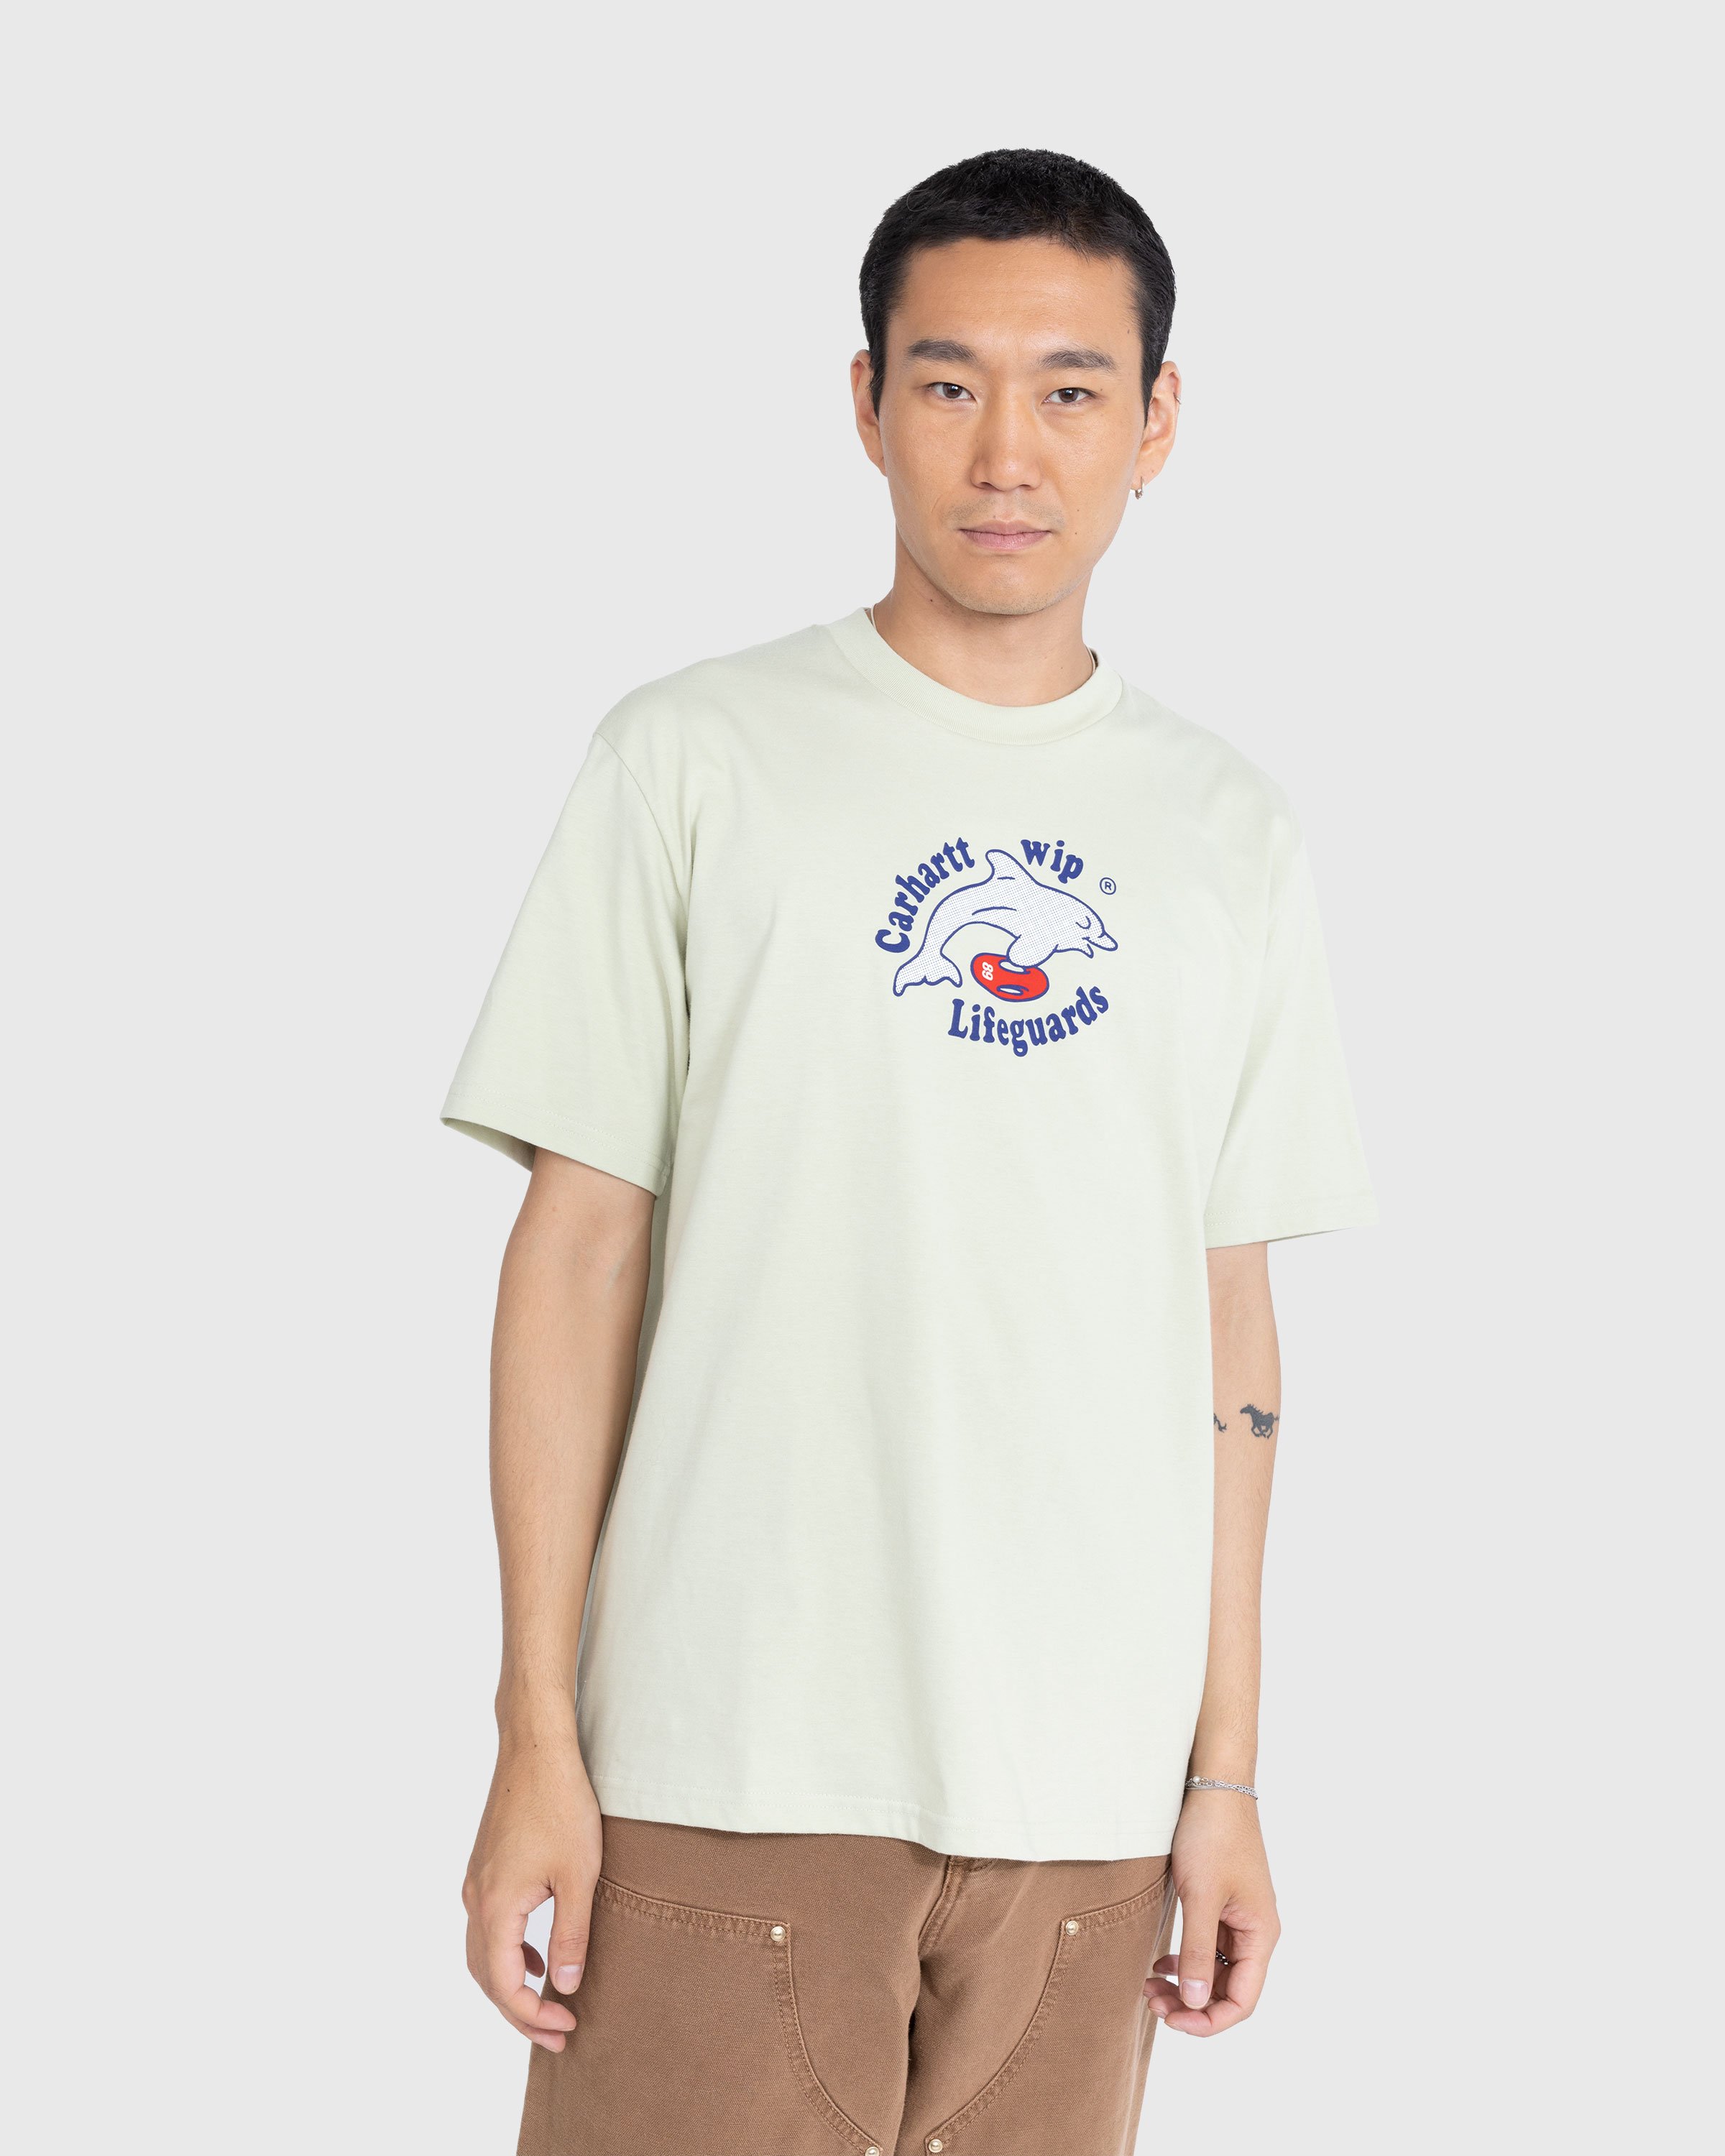 Carhartt WIP - Lifeguards T-Shirt Light Blue - Clothing - White - Image 3